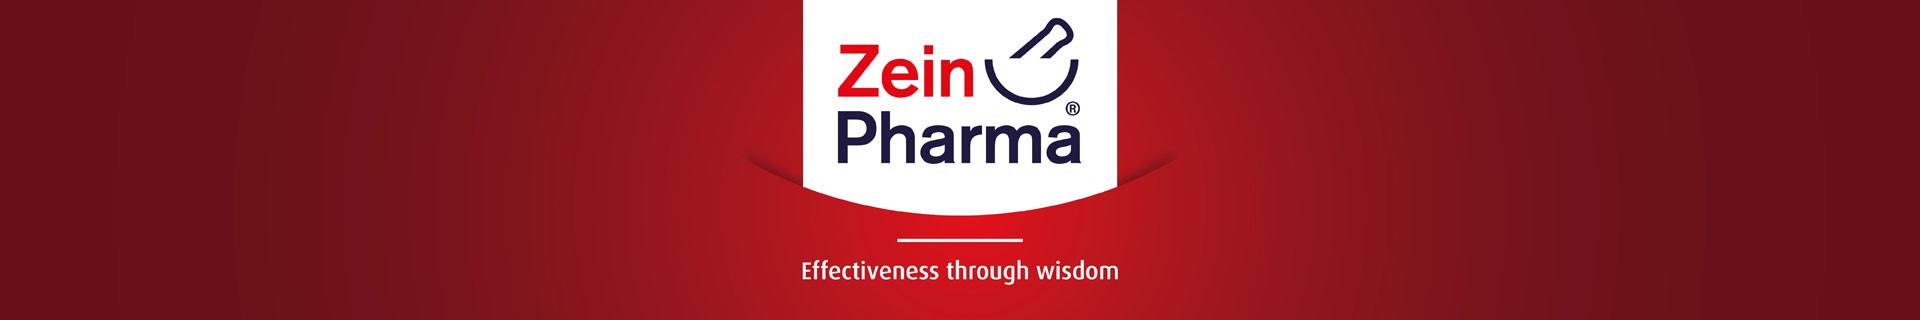 Zein Pharma 